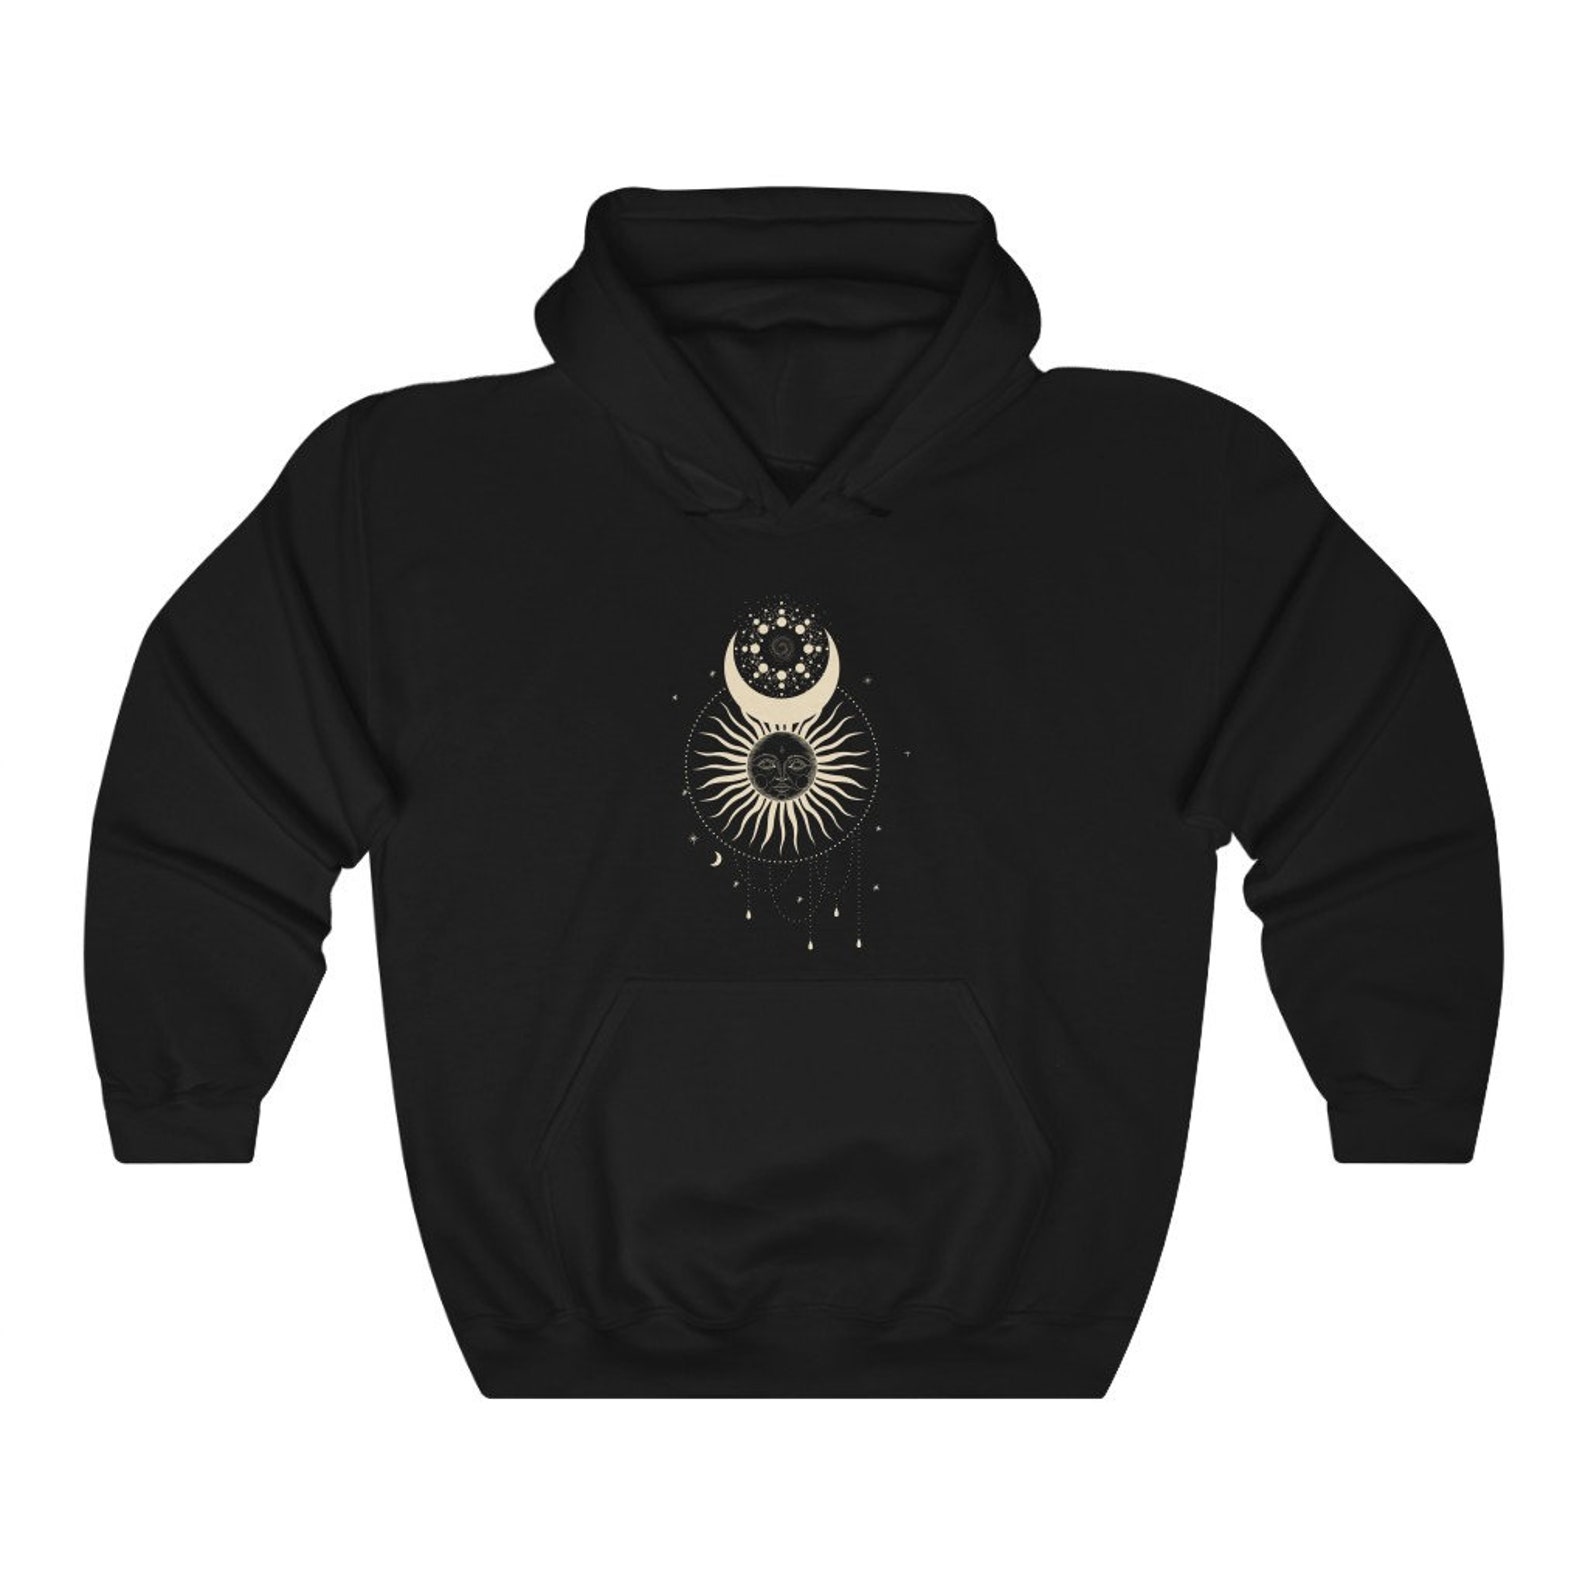 Moon Sun Sweatshirt / Moon phase sweater / Moon crewneck / | Etsy